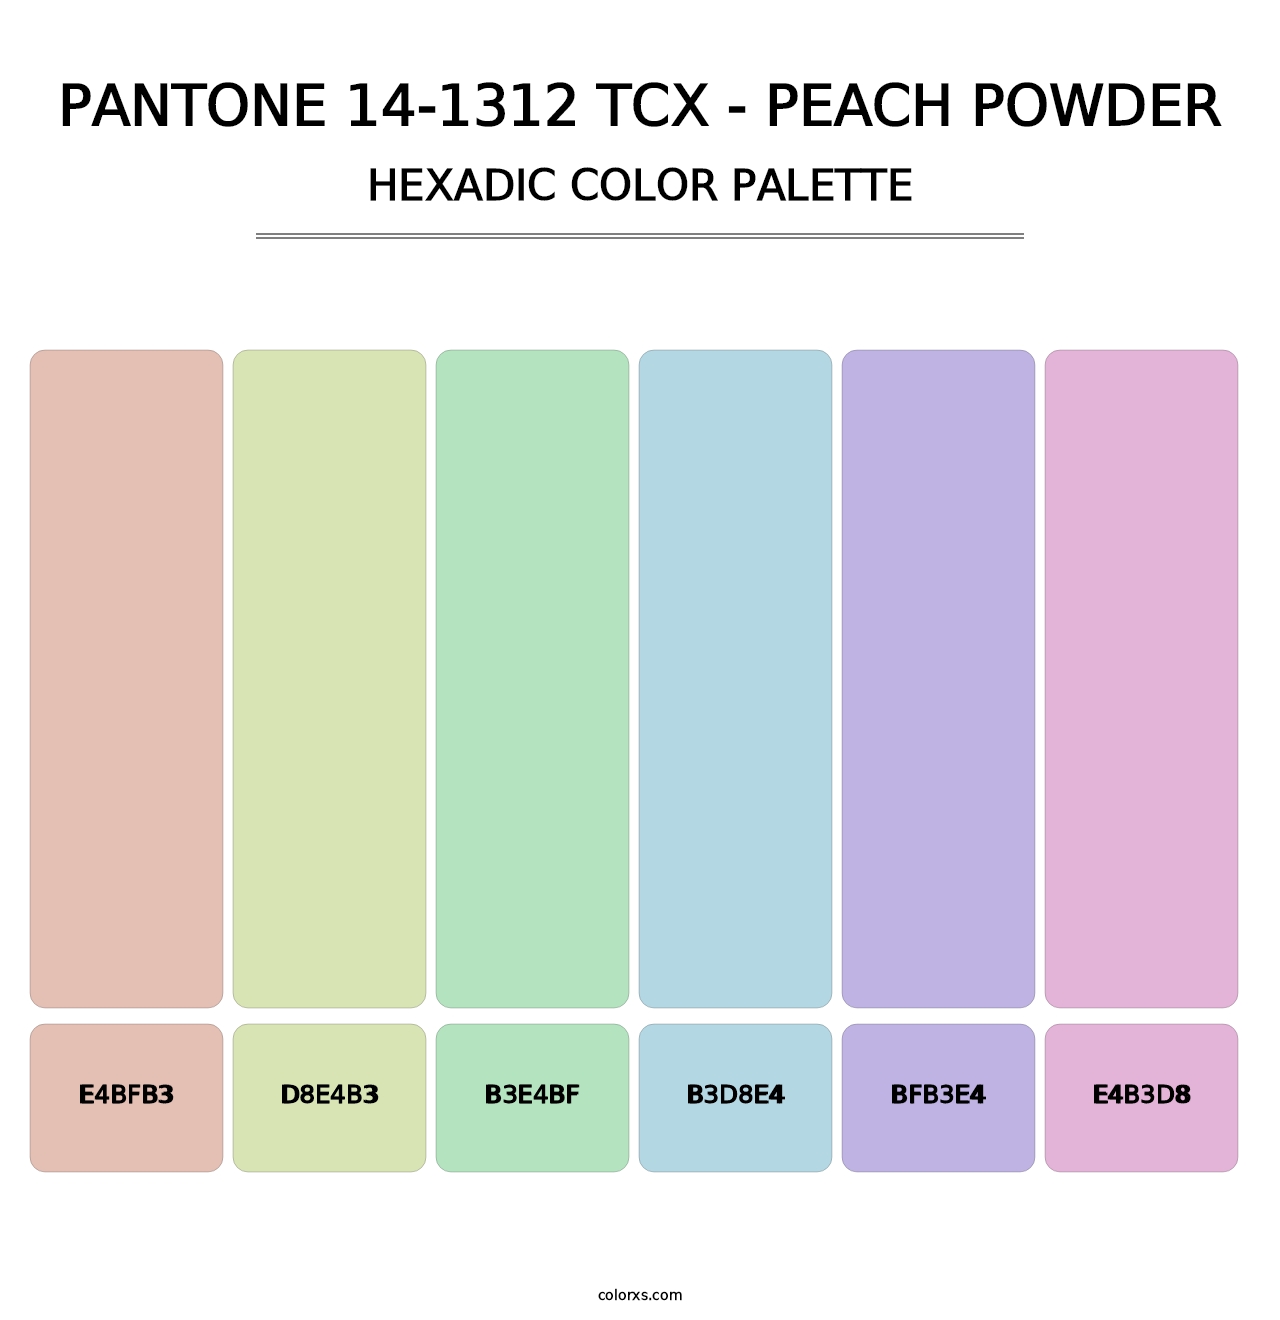 PANTONE 14-1312 TCX - Peach Powder - Hexadic Color Palette